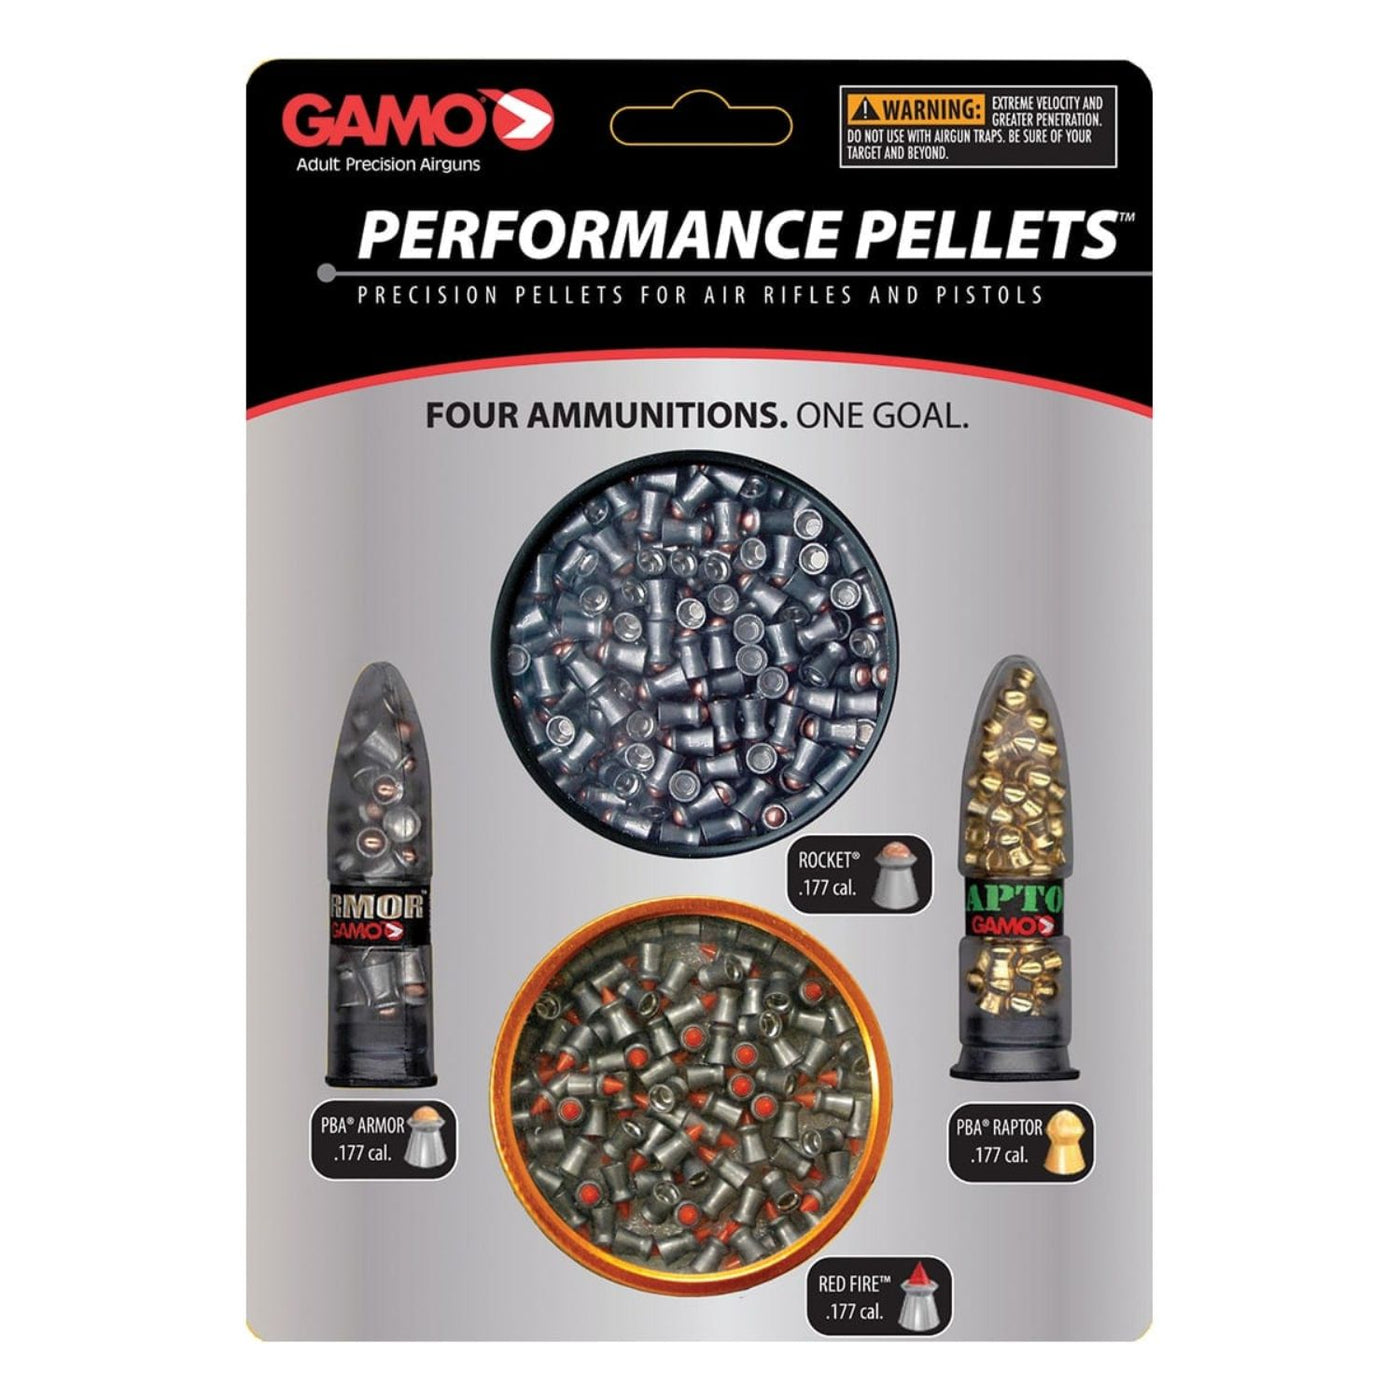 Gamo Combo Pack Performance Cal Hunting Pellets